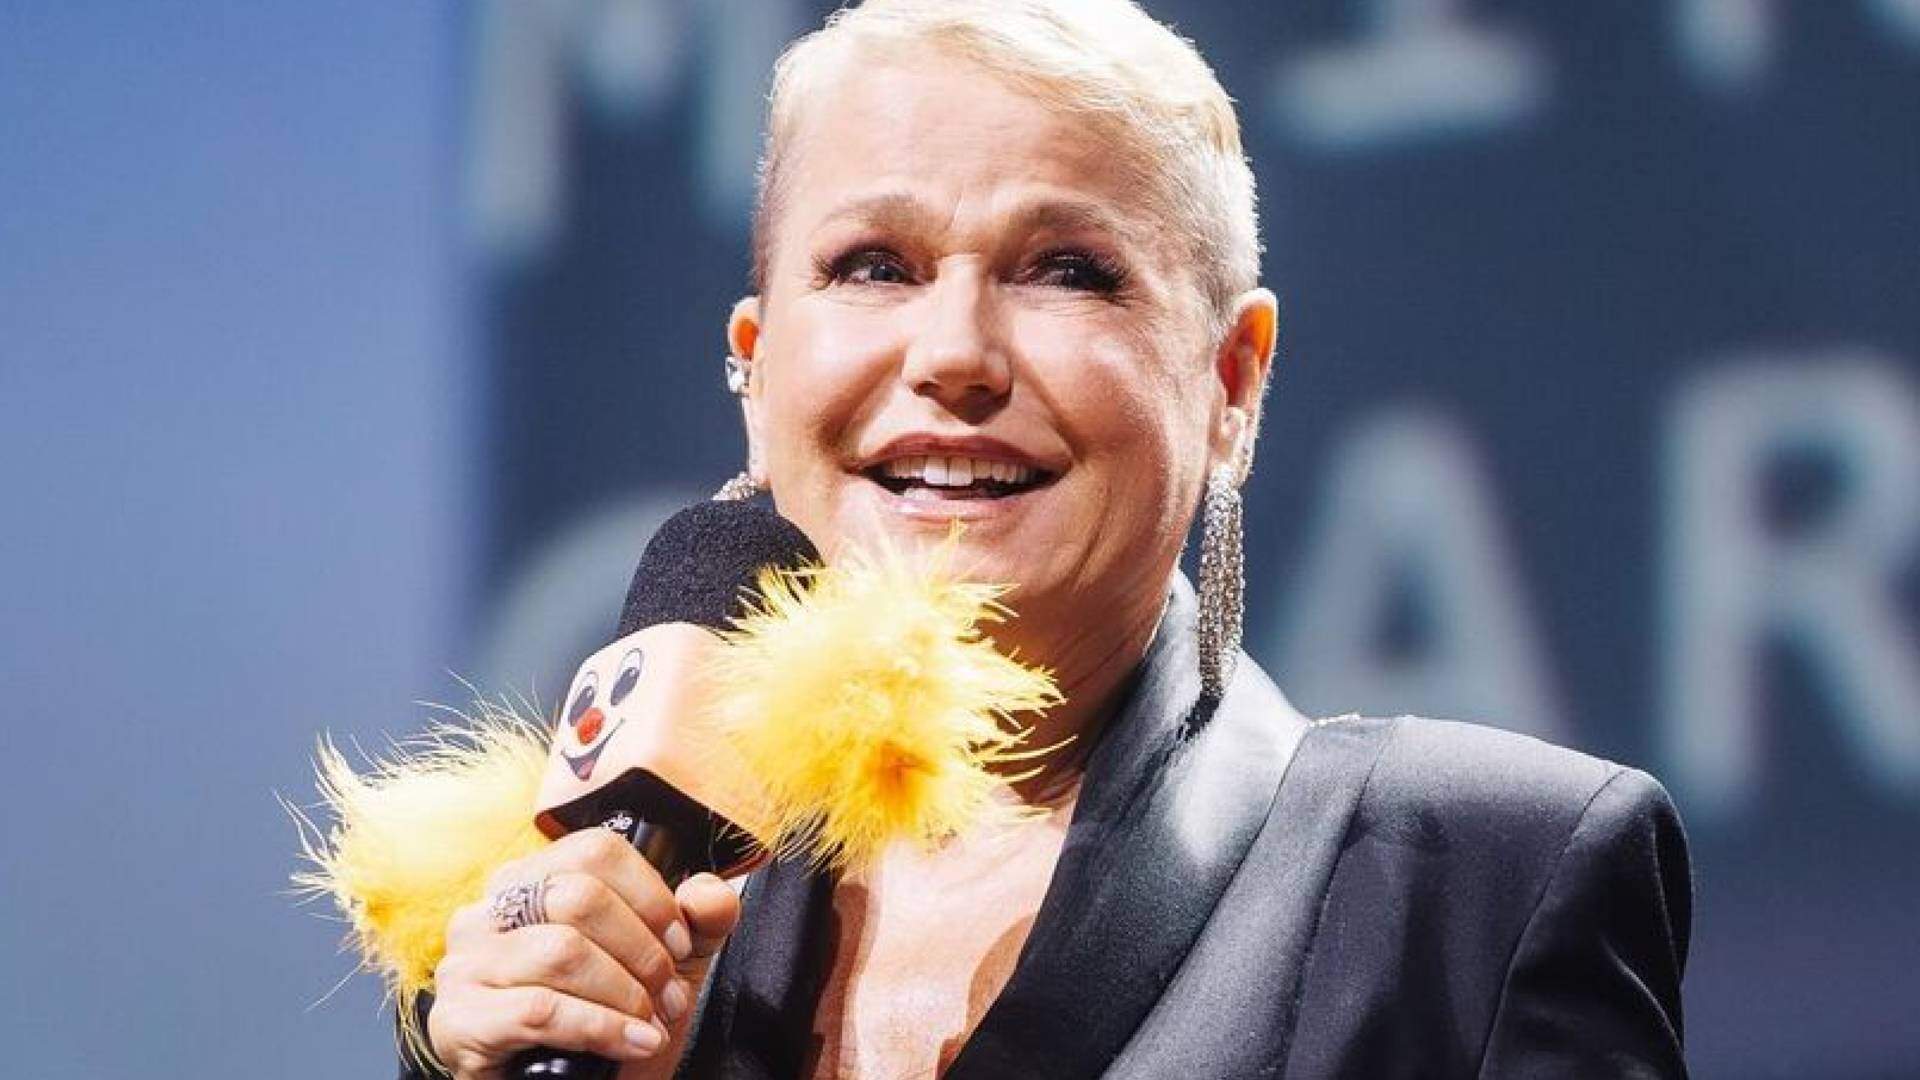 Xuxa cai no choro ao relembrar atitude polêmica que tinha como apresentadora infantil: “Desculpa”